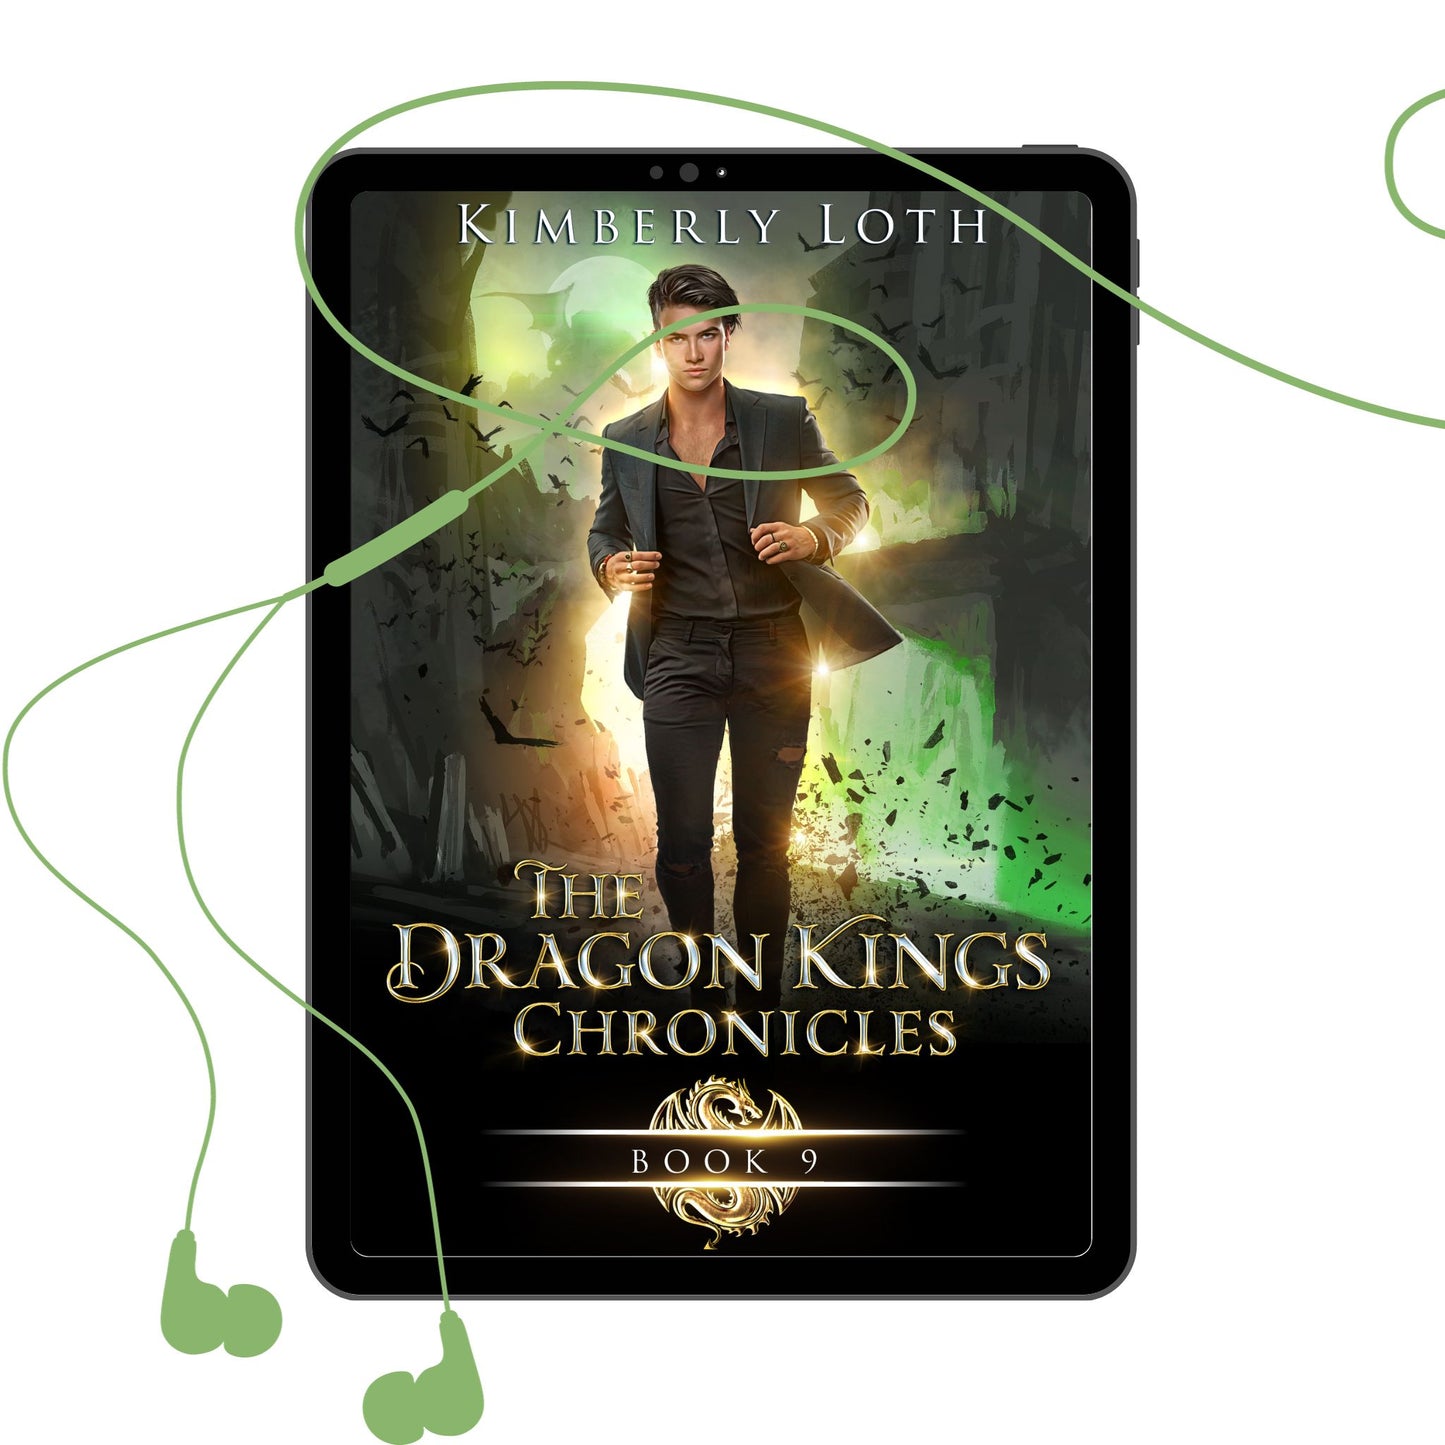 The Dragon Kings Book Fourteen